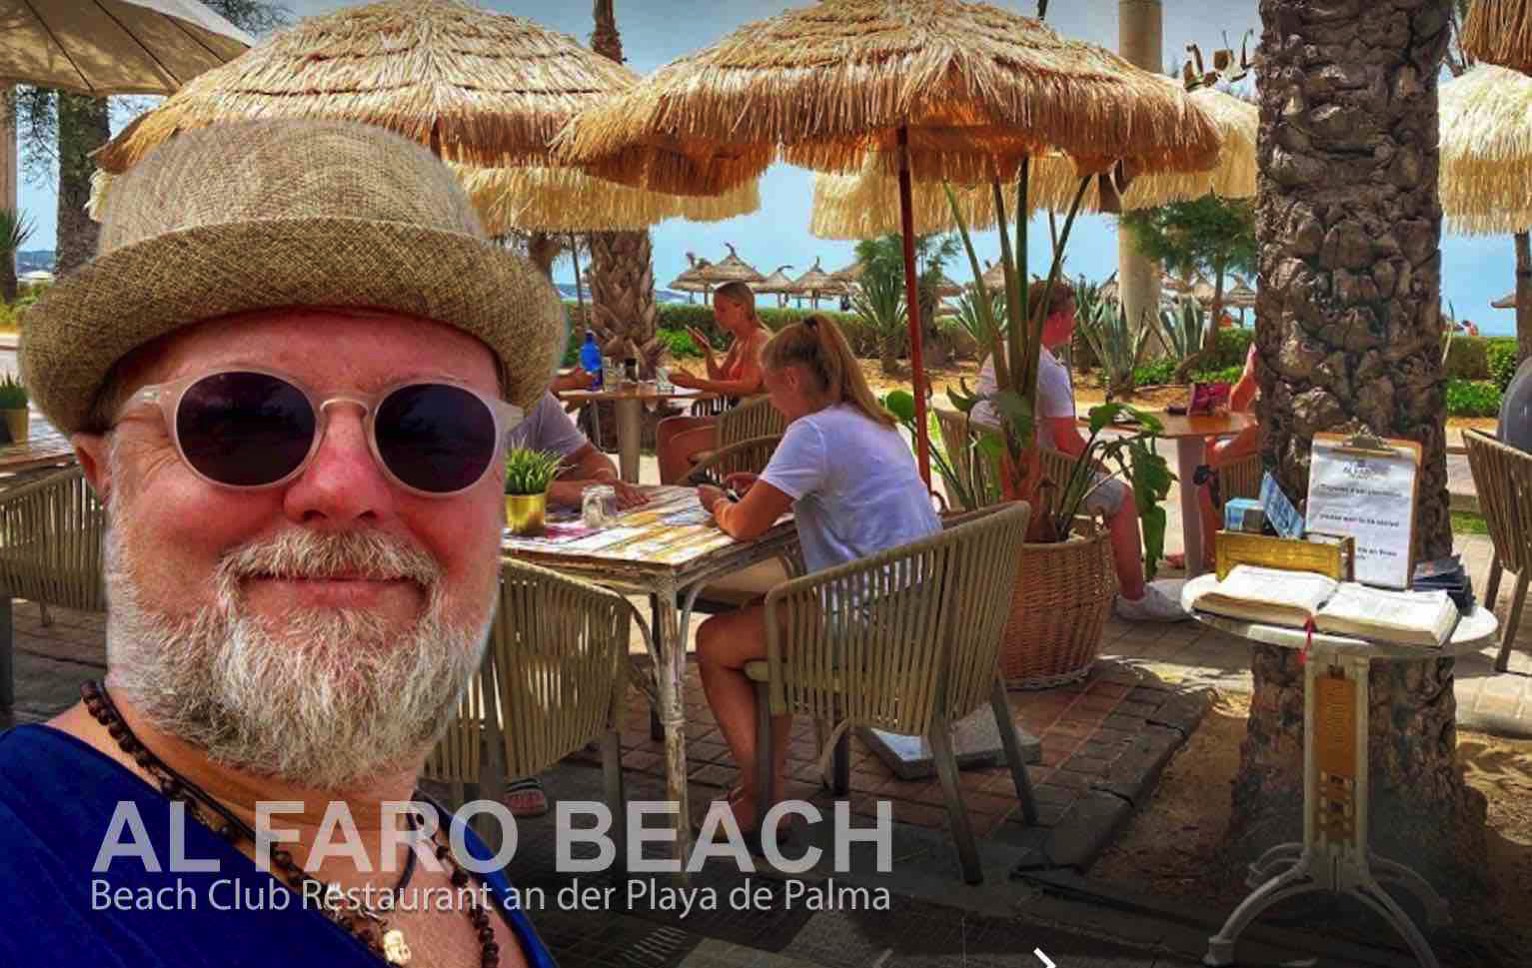 Beach Club Restaurant an der Playa de Palma